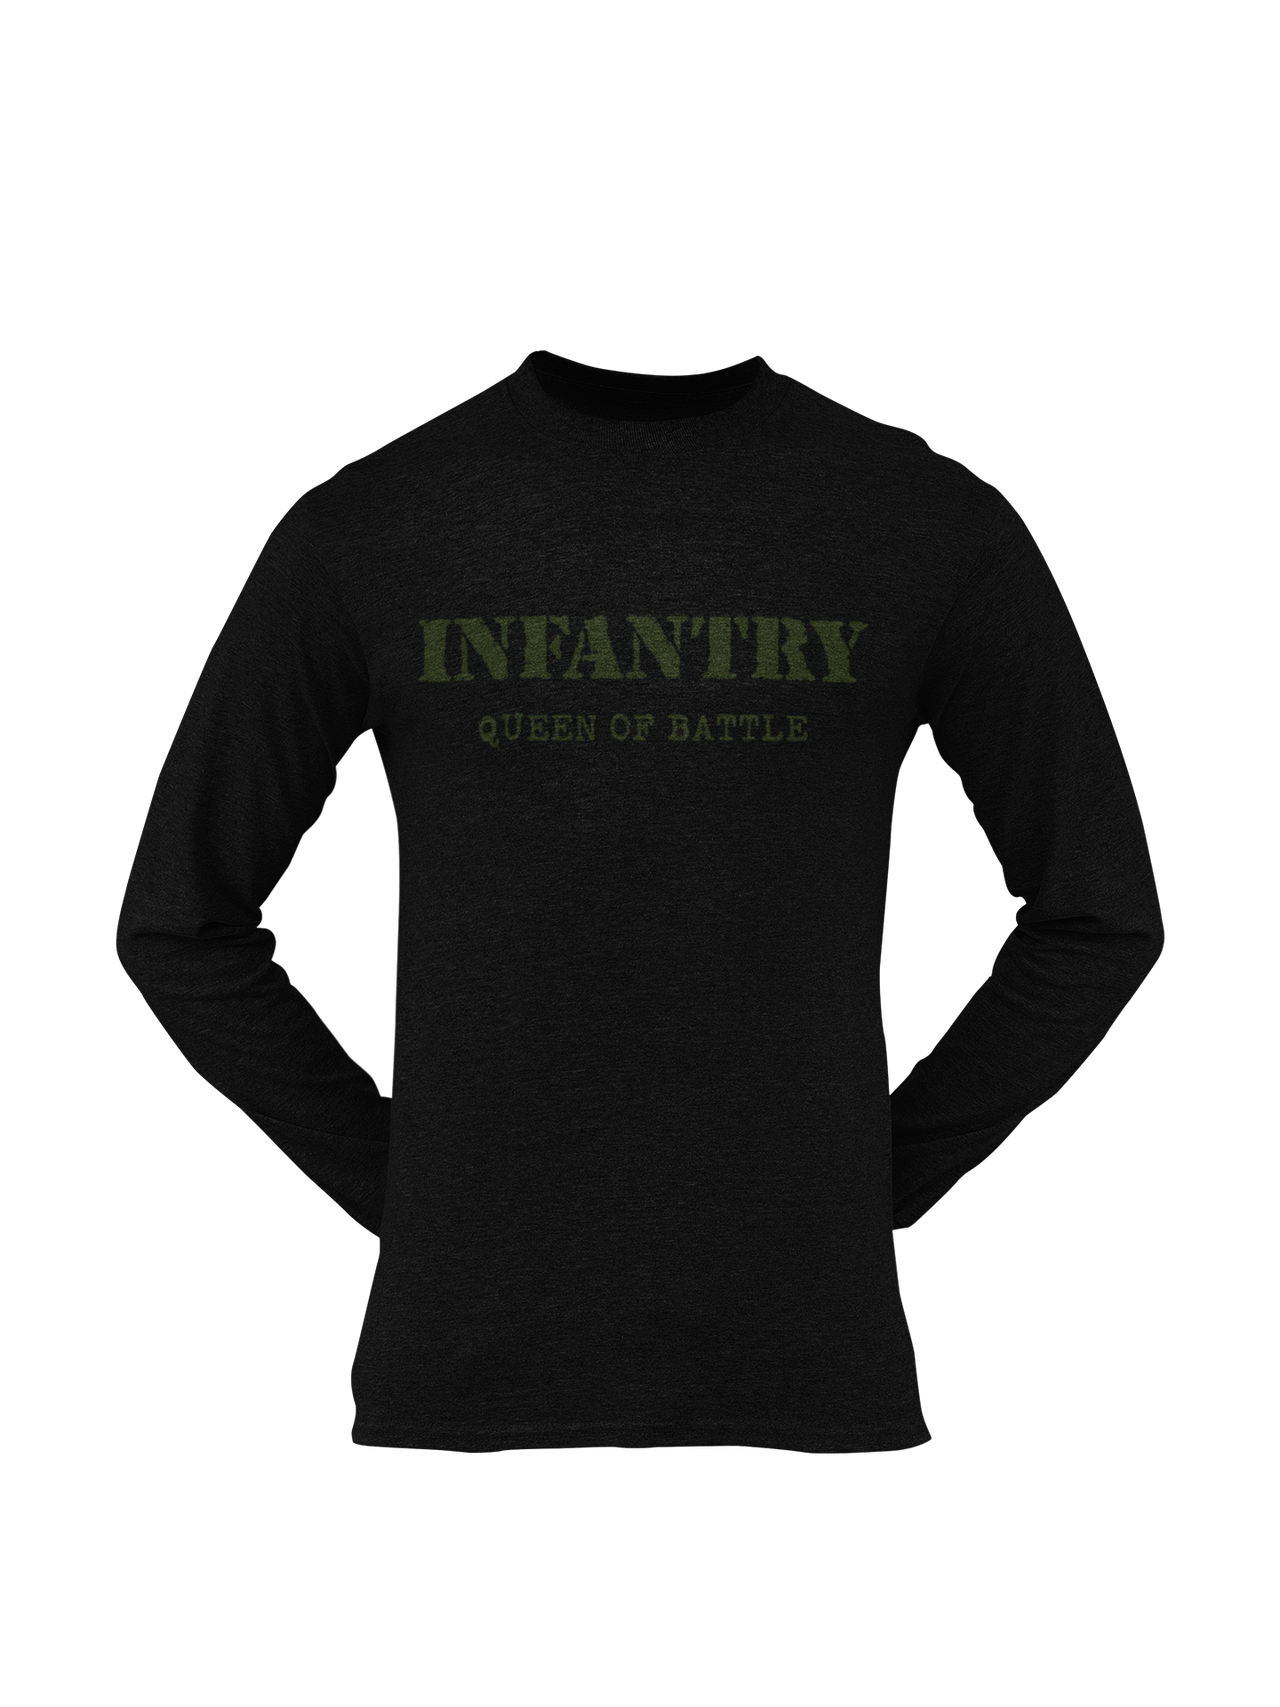 Infantry T-shirt - Queen of Battle (Men)